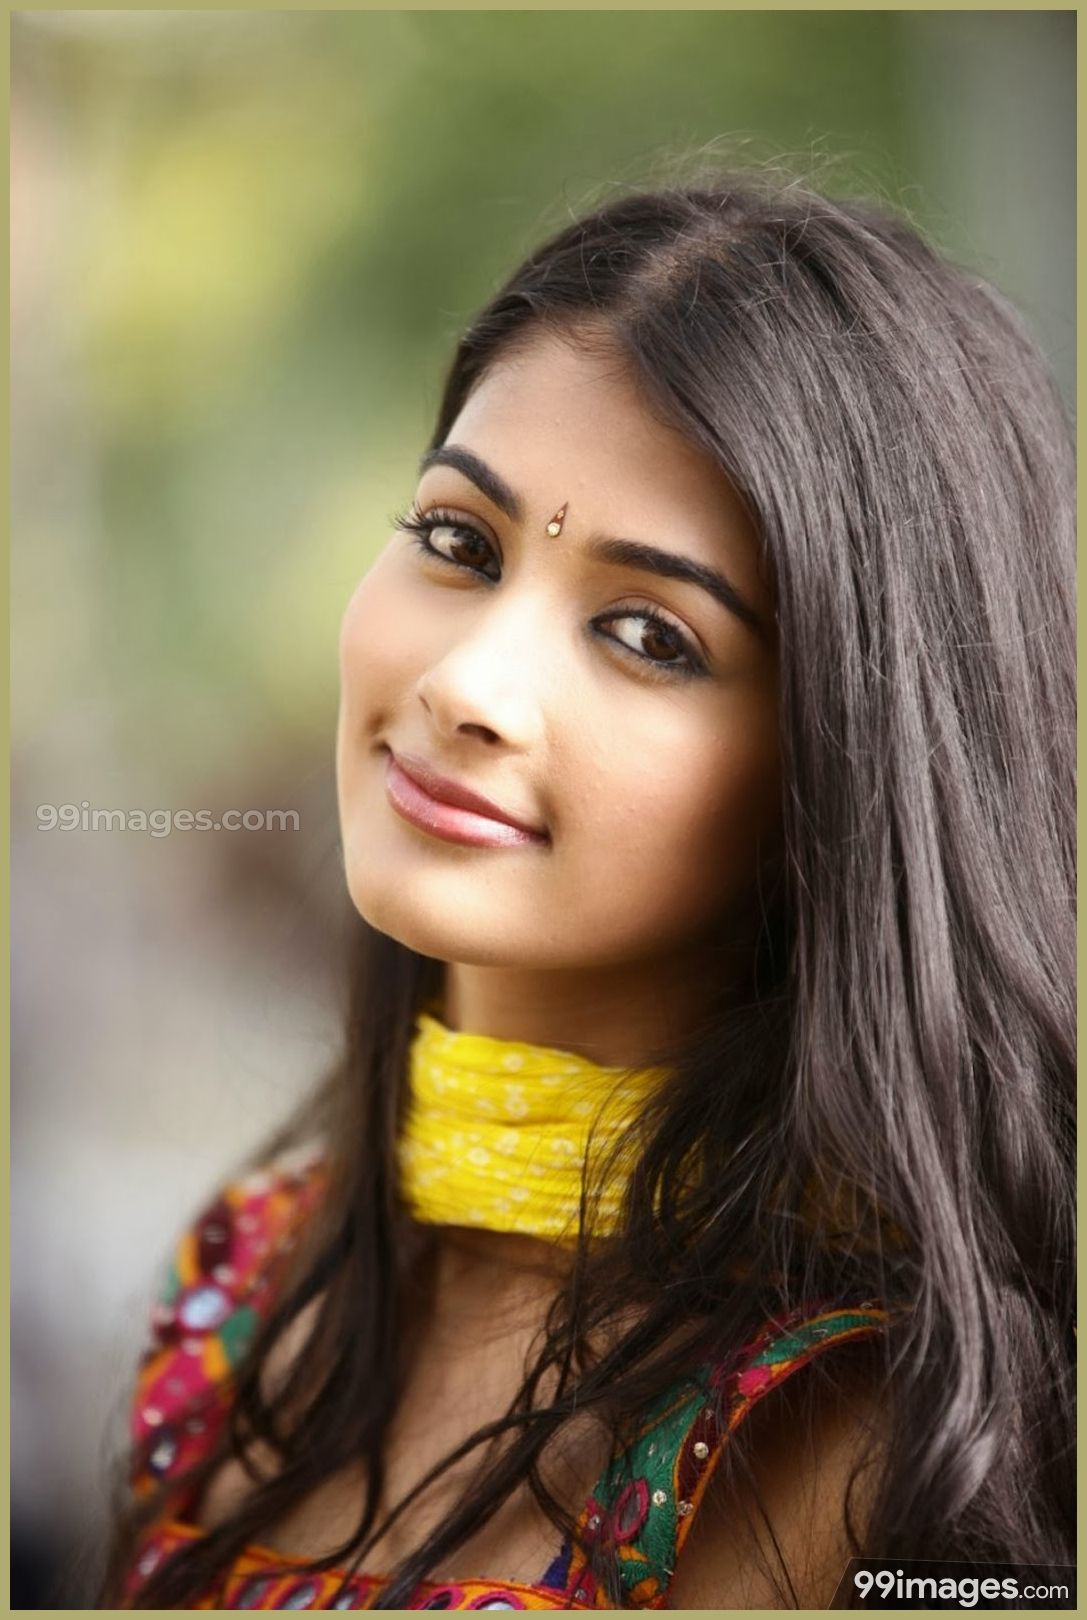 tamil movies hd wallpapers 1080p,hair,hairstyle,beauty,eyebrow,lip